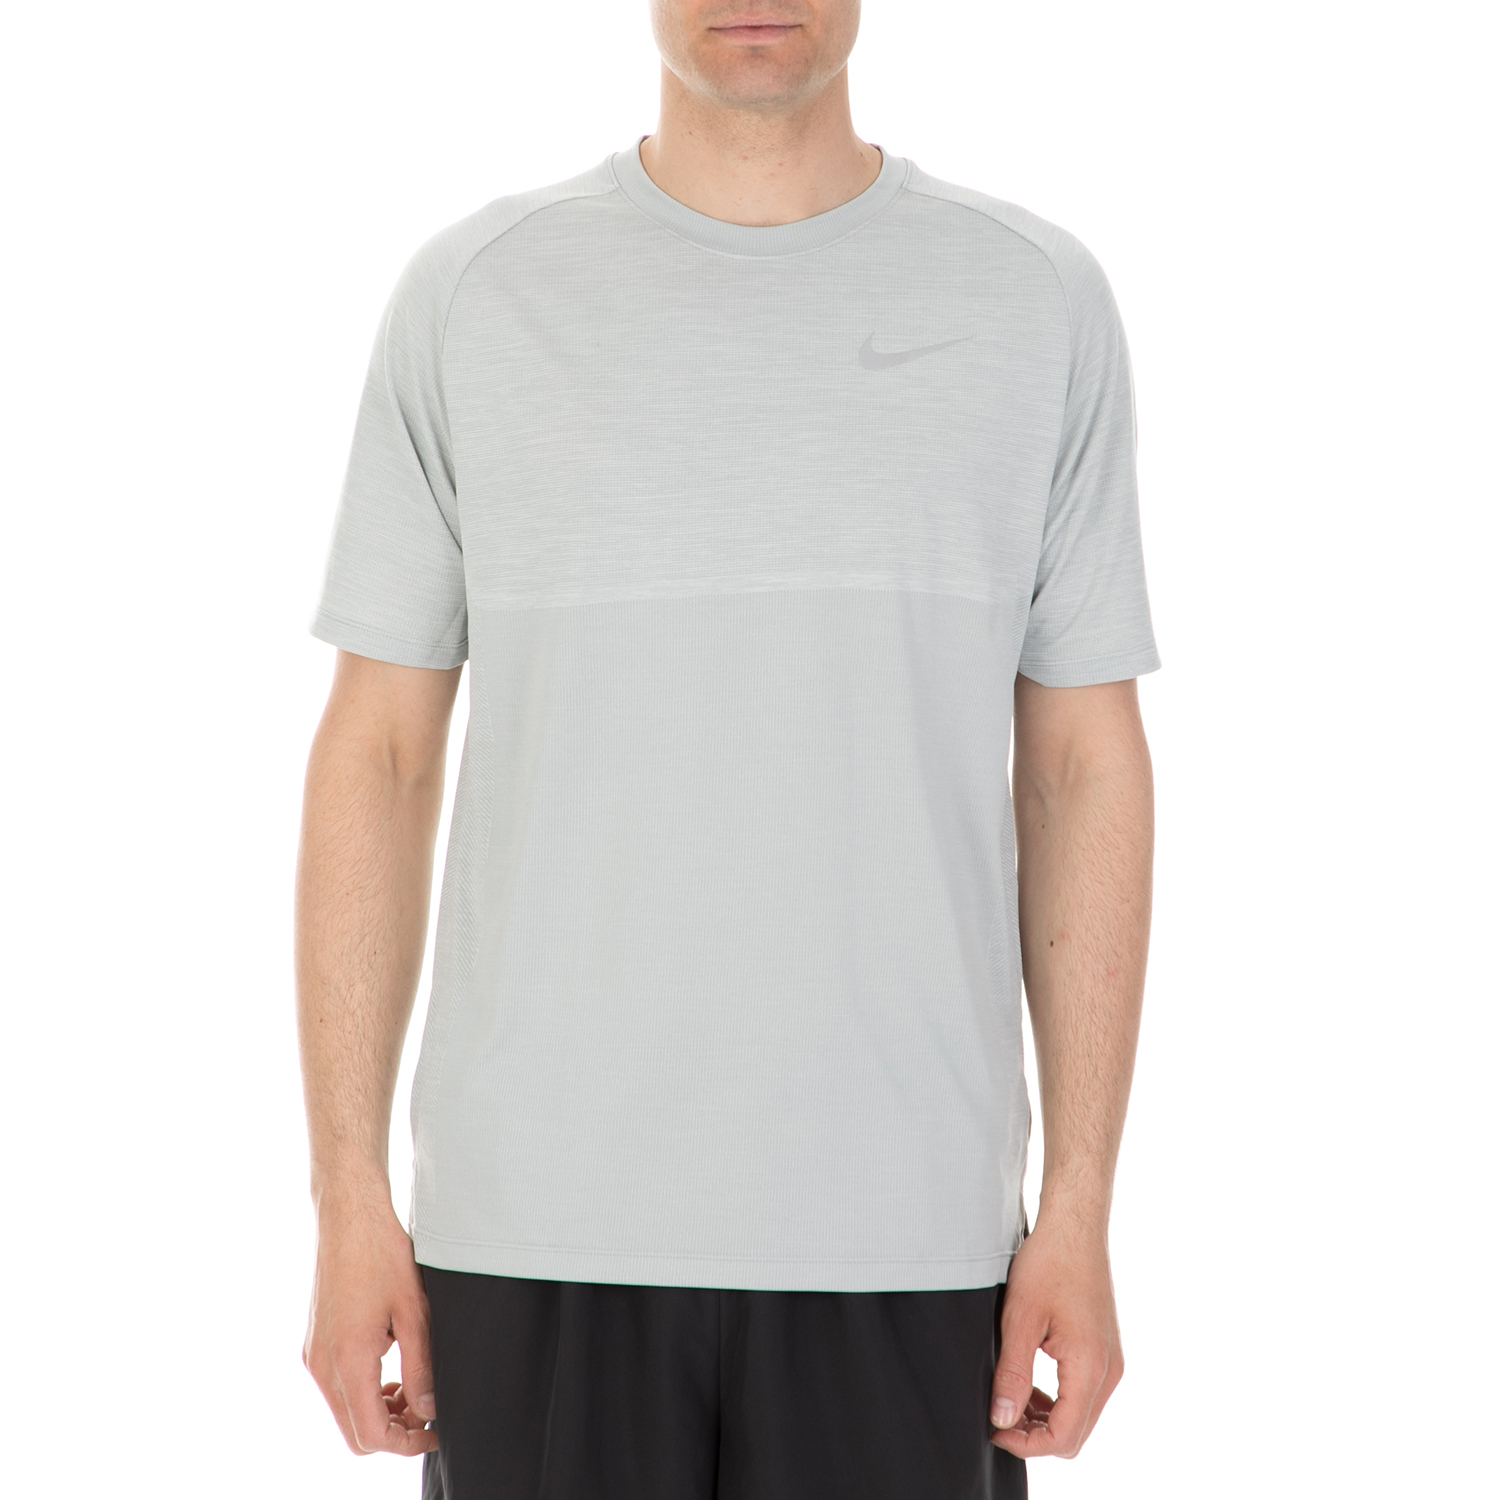 NIKE - Ανδρική κοντομάνικη μπλούζα Nike DRY MEDALIST TOP εκρού-γκρι Ανδρικά/Ρούχα/Αθλητικά/T-shirt